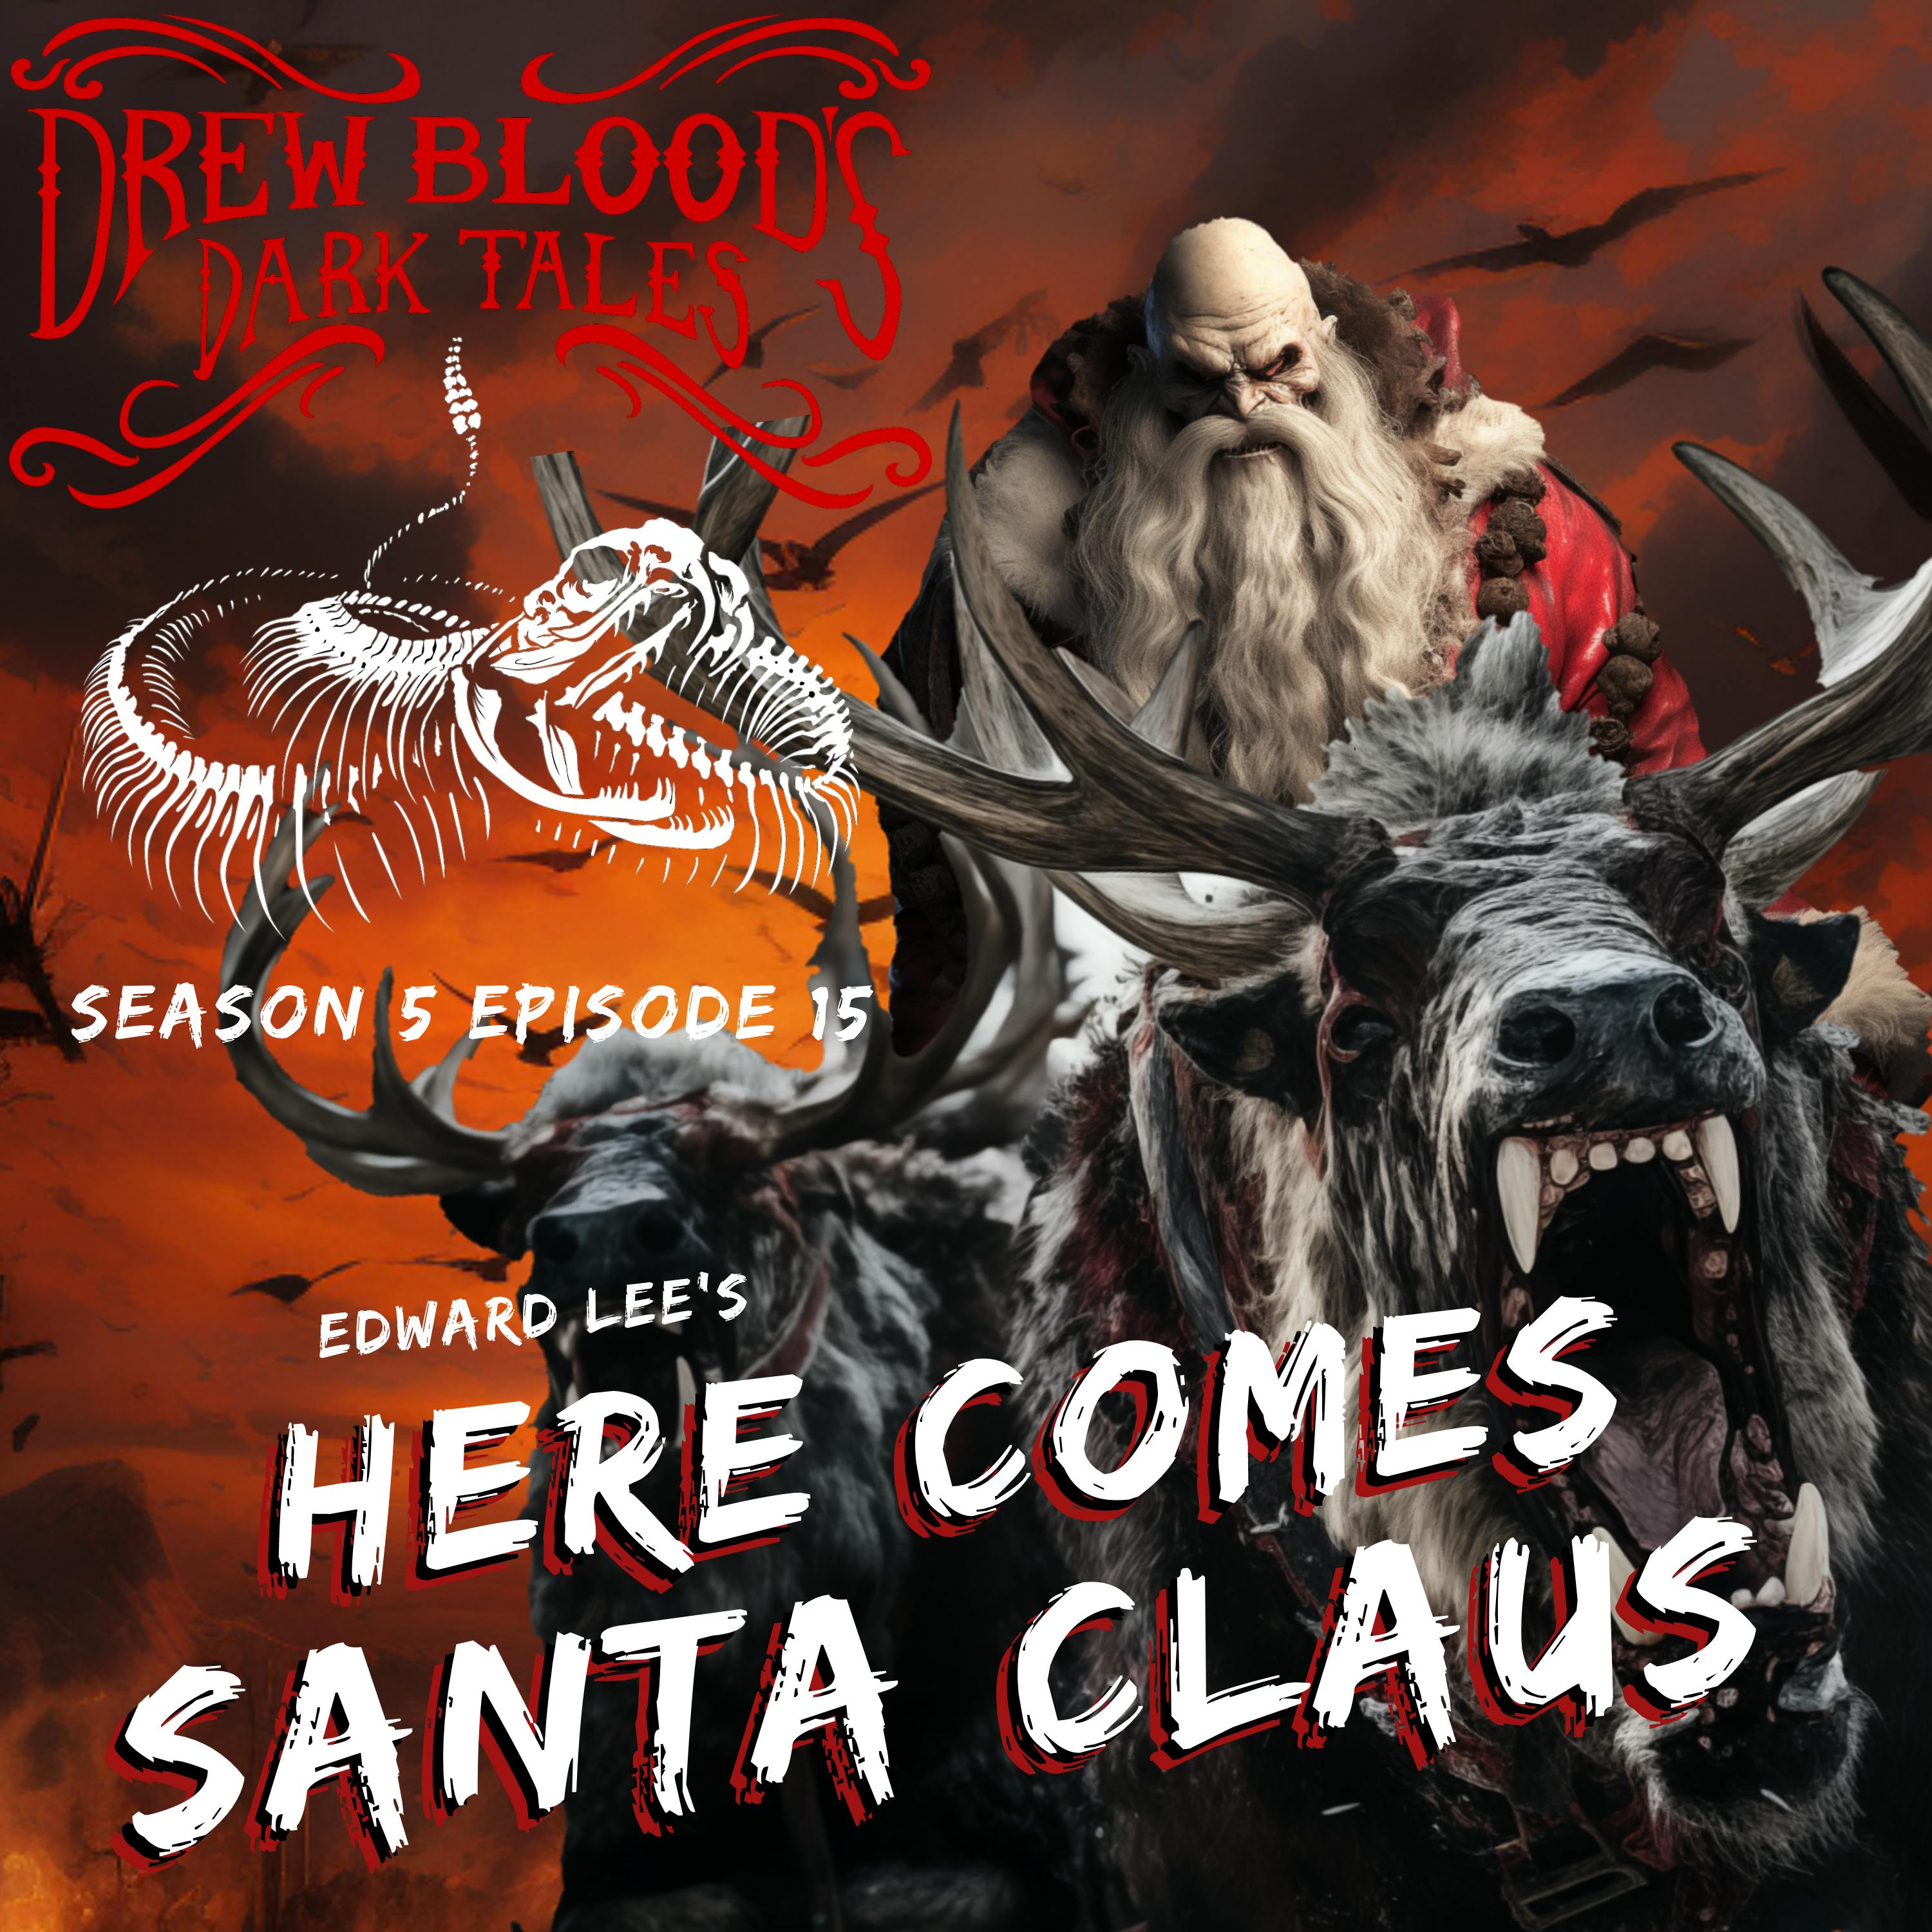 S5E15 - "Here Comes Santa Claus " - Drew Blood